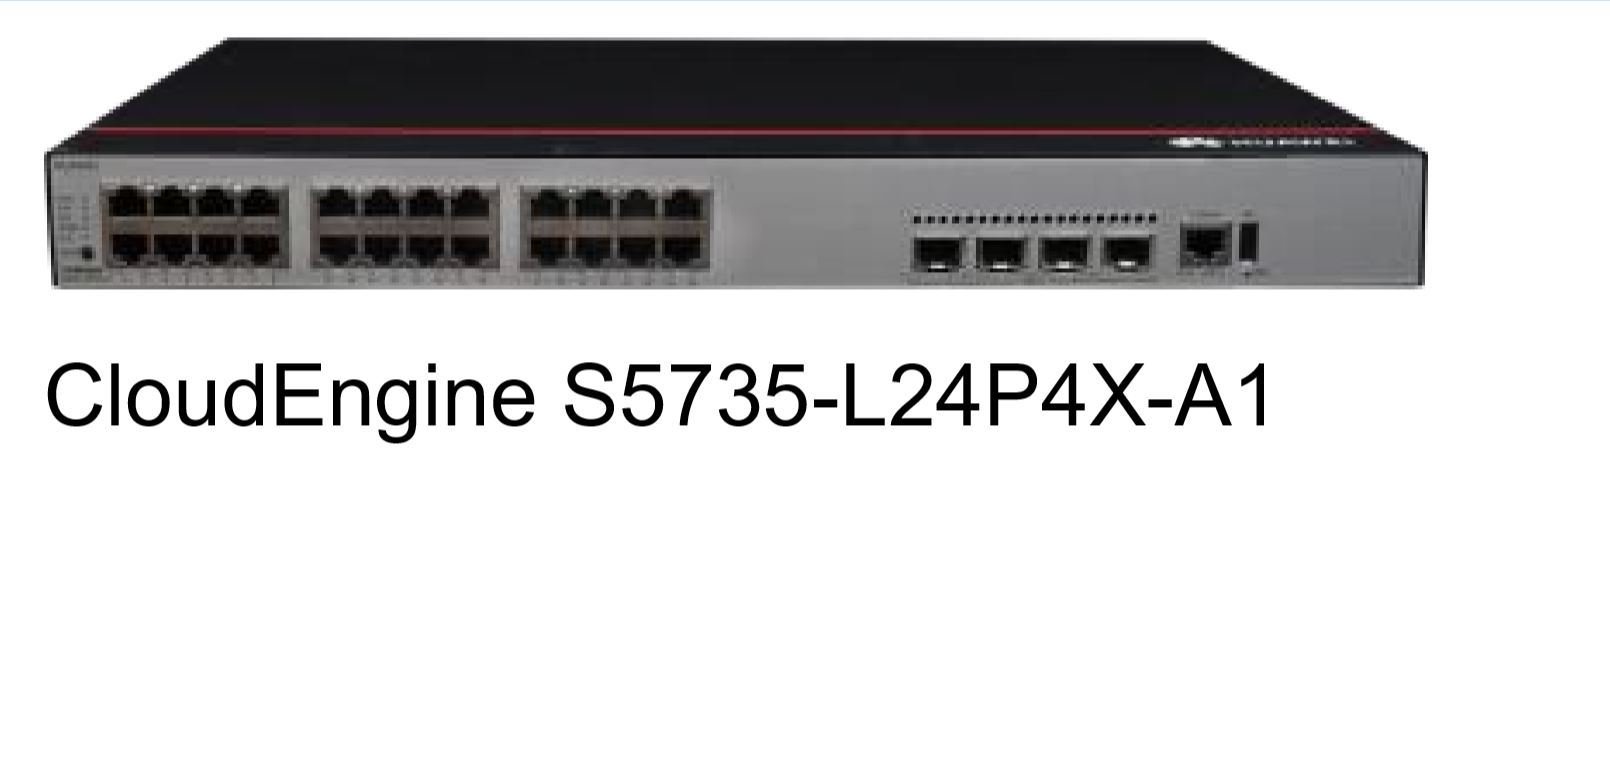 HUAWEI S5735-L24P4X-A1 24 10/100/1000BASE-T ports 4 10GE SFP+ ports PoE+ AC power